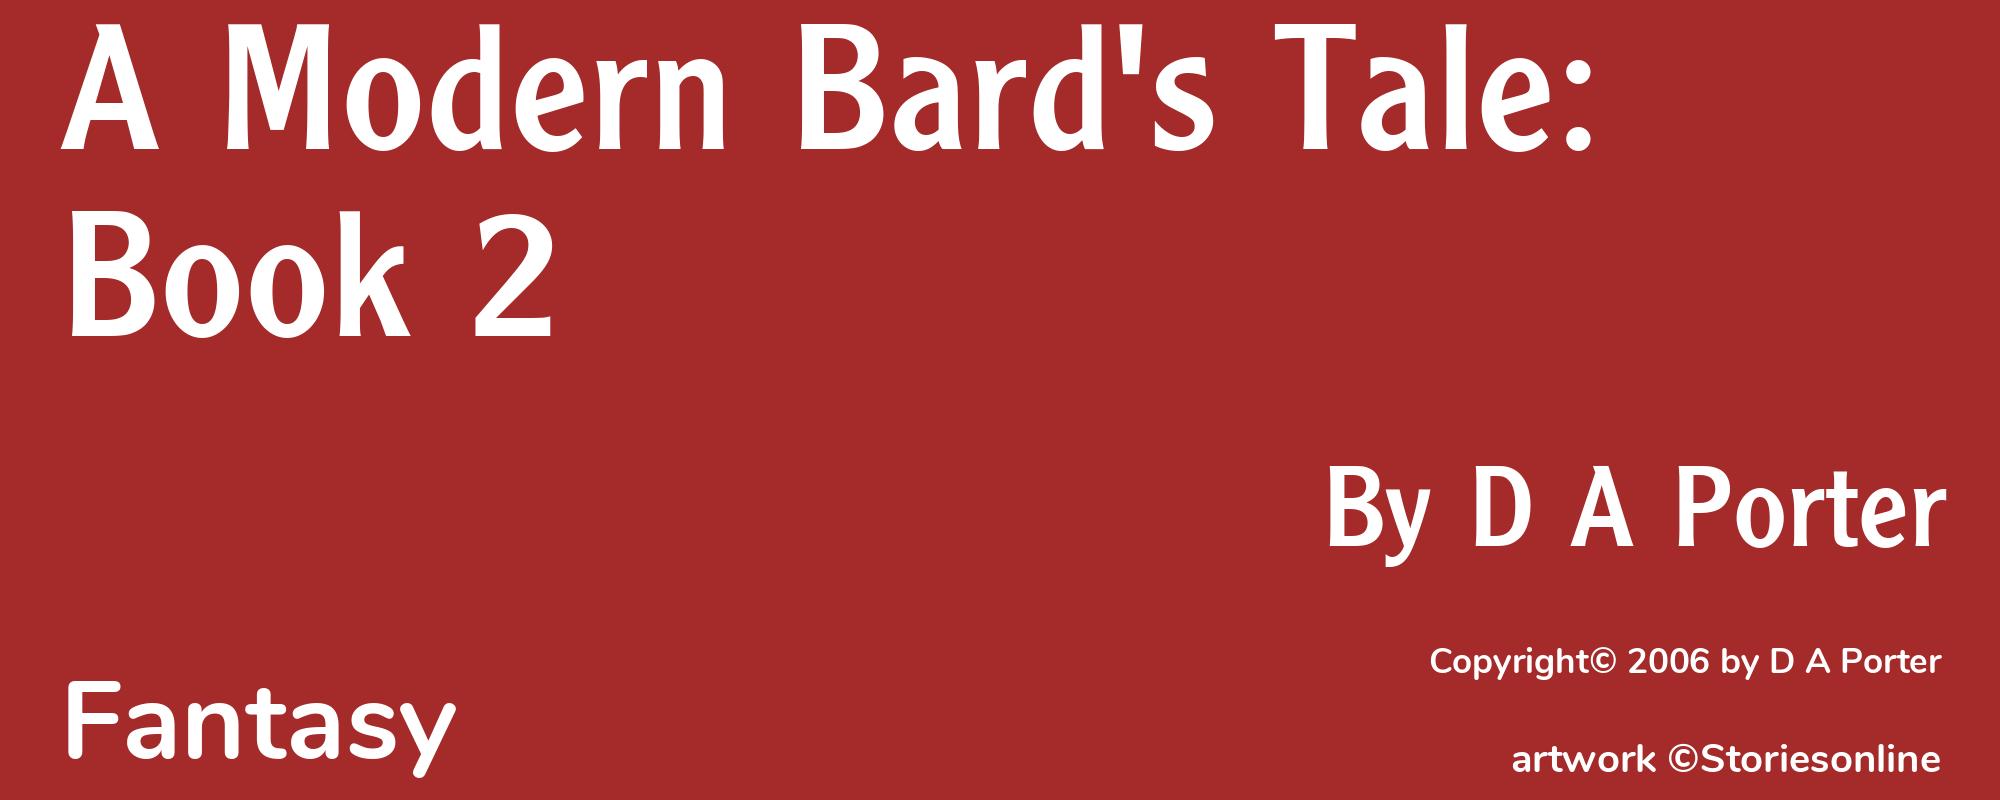 A Modern Bard's Tale: Book 2 - Cover